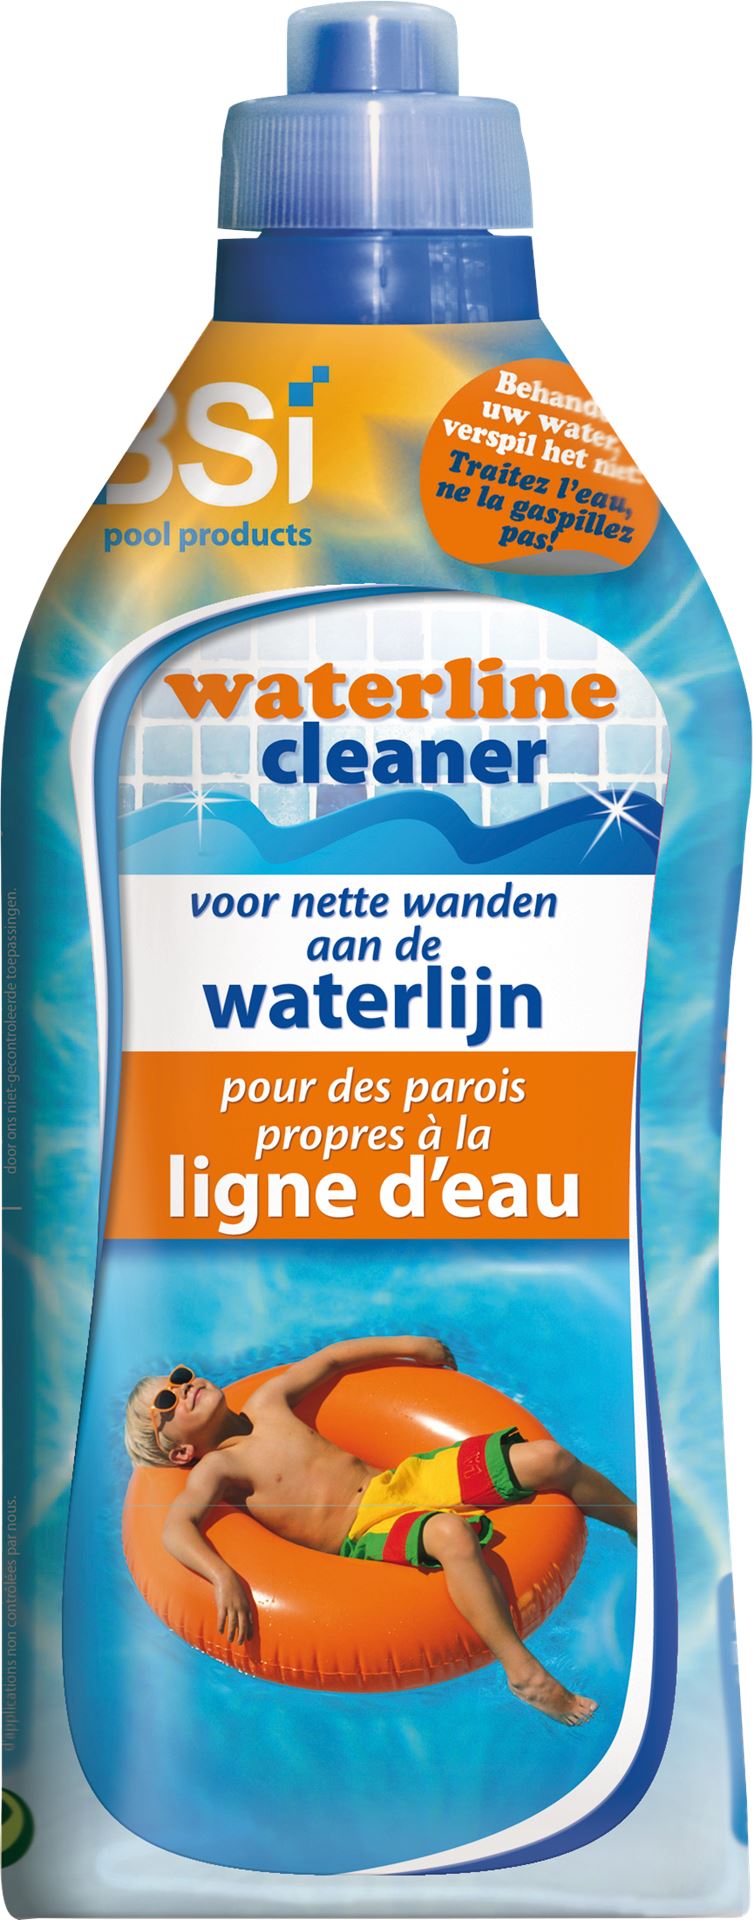 Waterline-cleaner-1-L